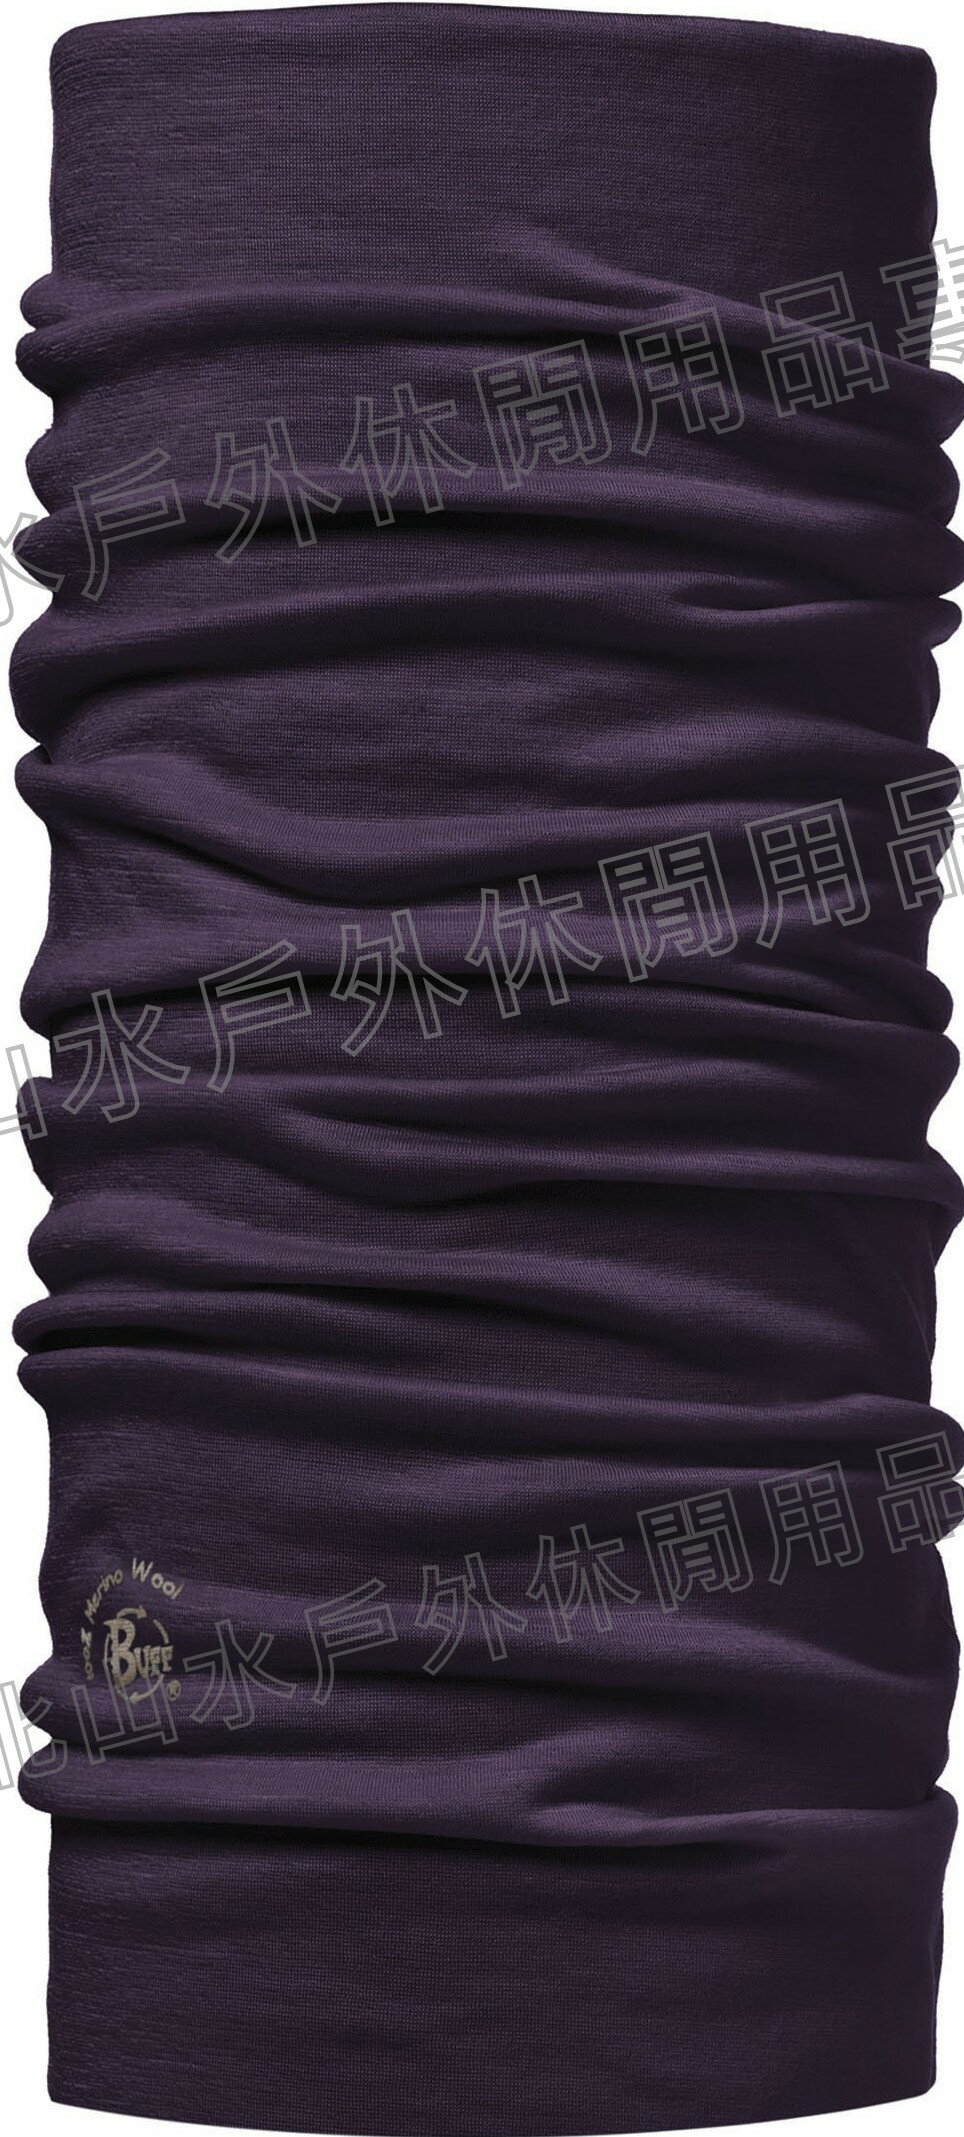 [ Buff ] 羊毛頭巾/健行/滑雪/出國/旅遊 素色美麗諾羊毛 WOOL BUFF 100638 紫色葡萄